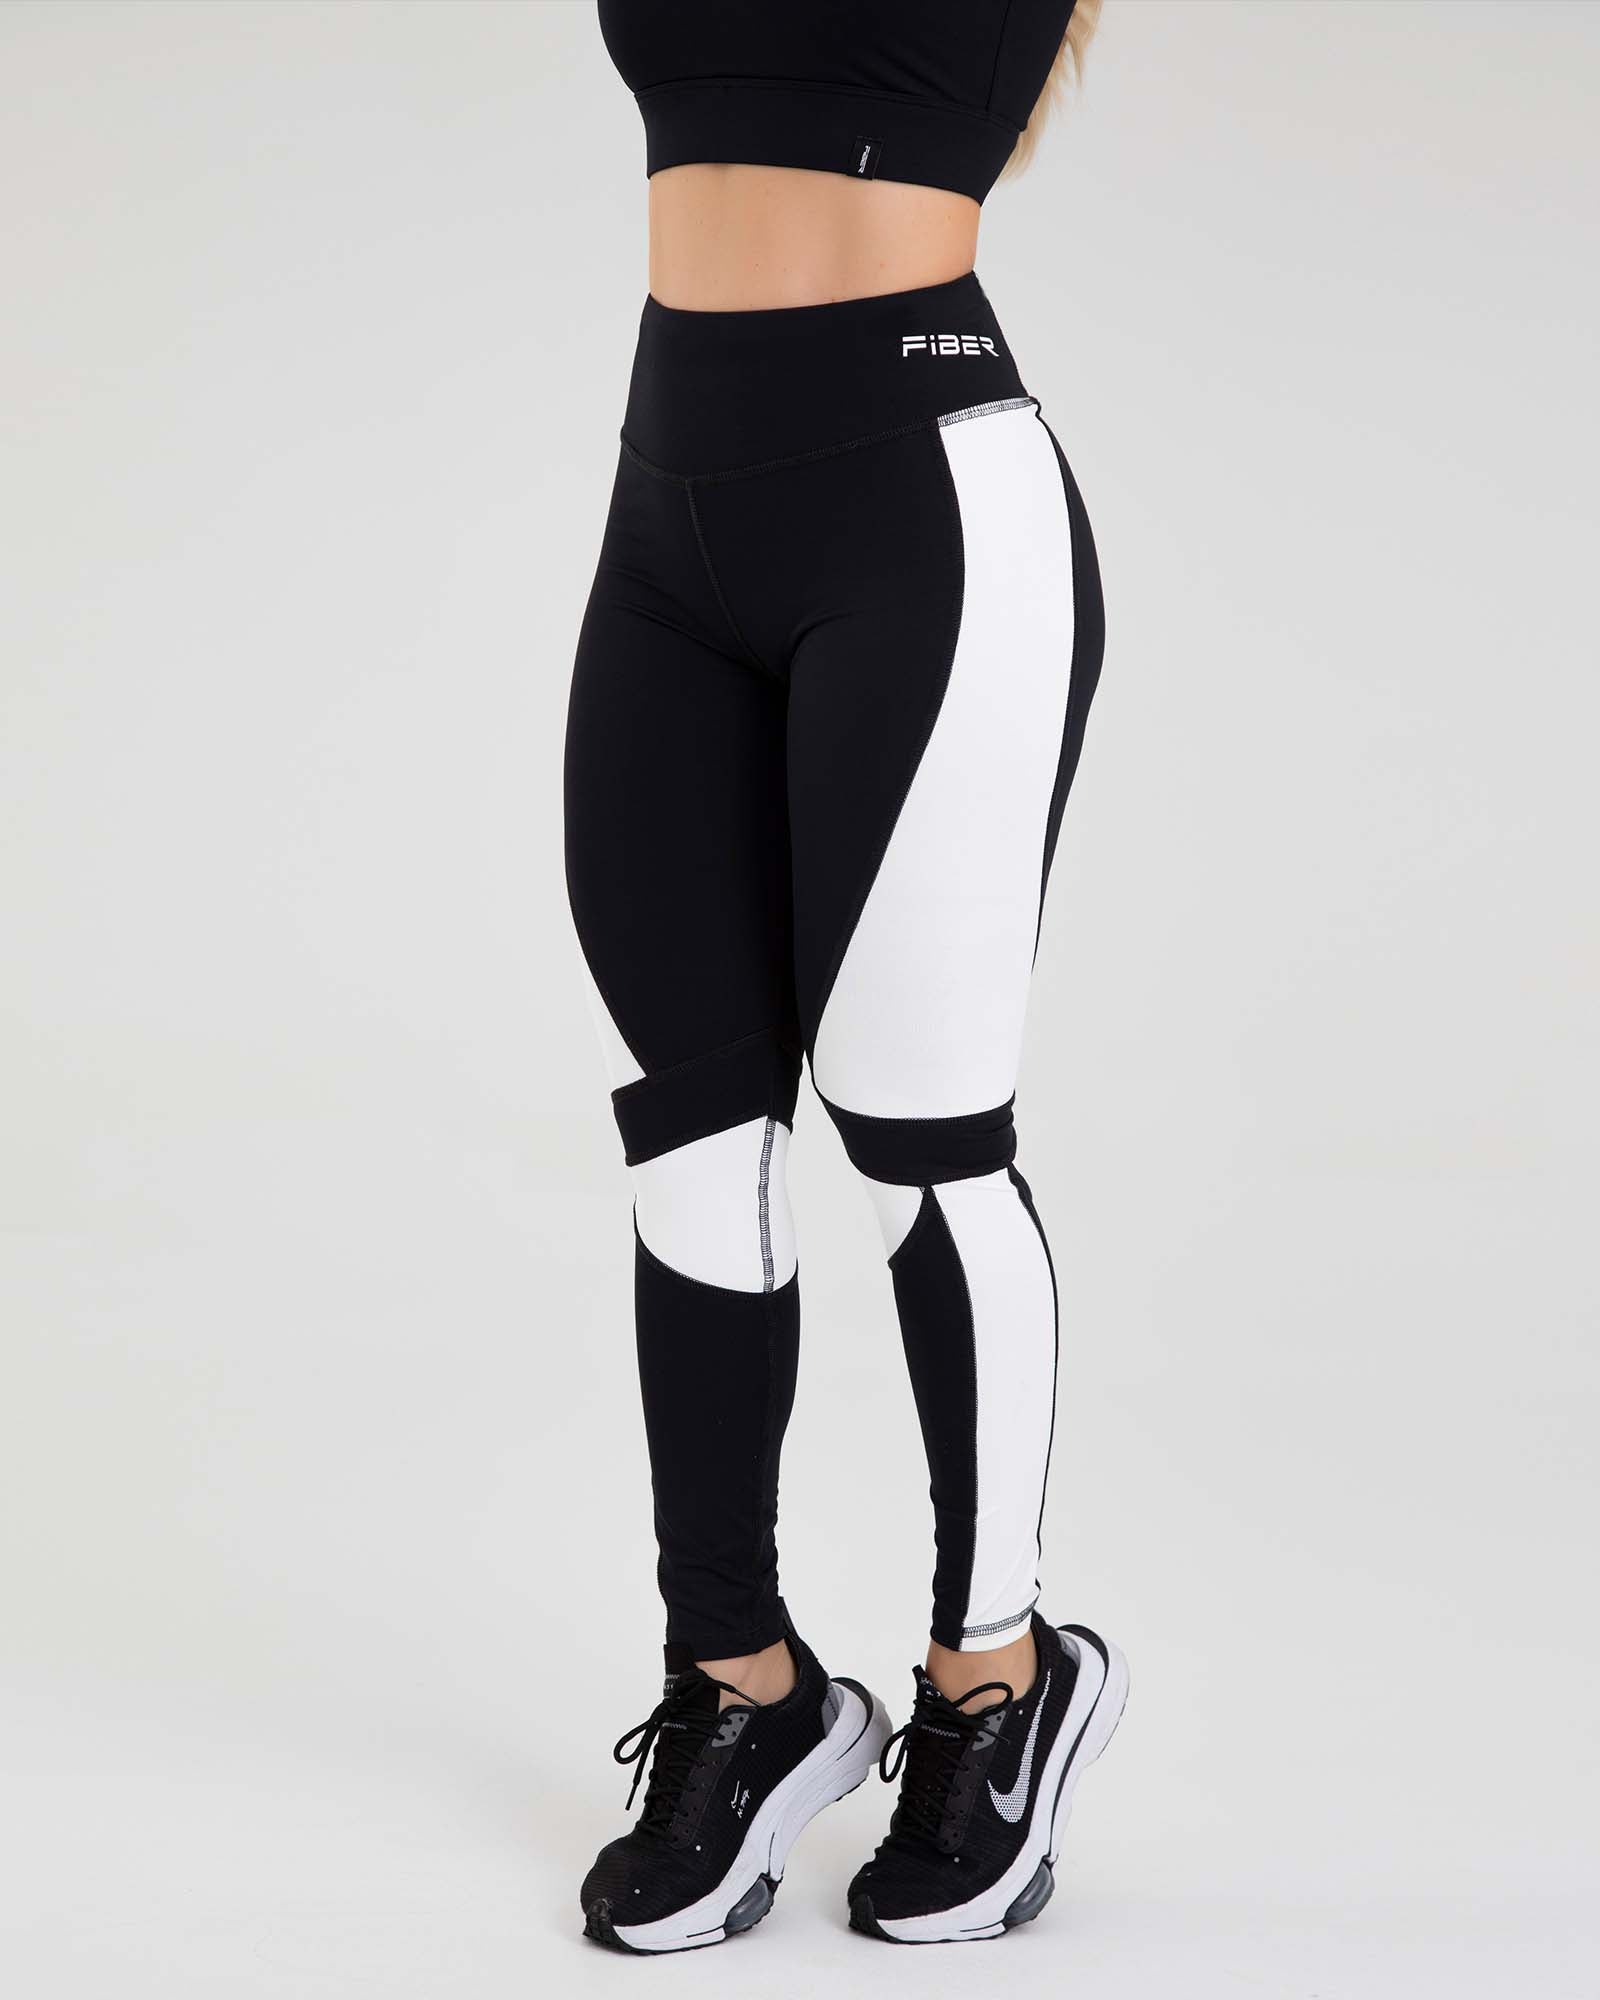 New leggings Colombia Fiber / Licras colombianas fiber for Sale in